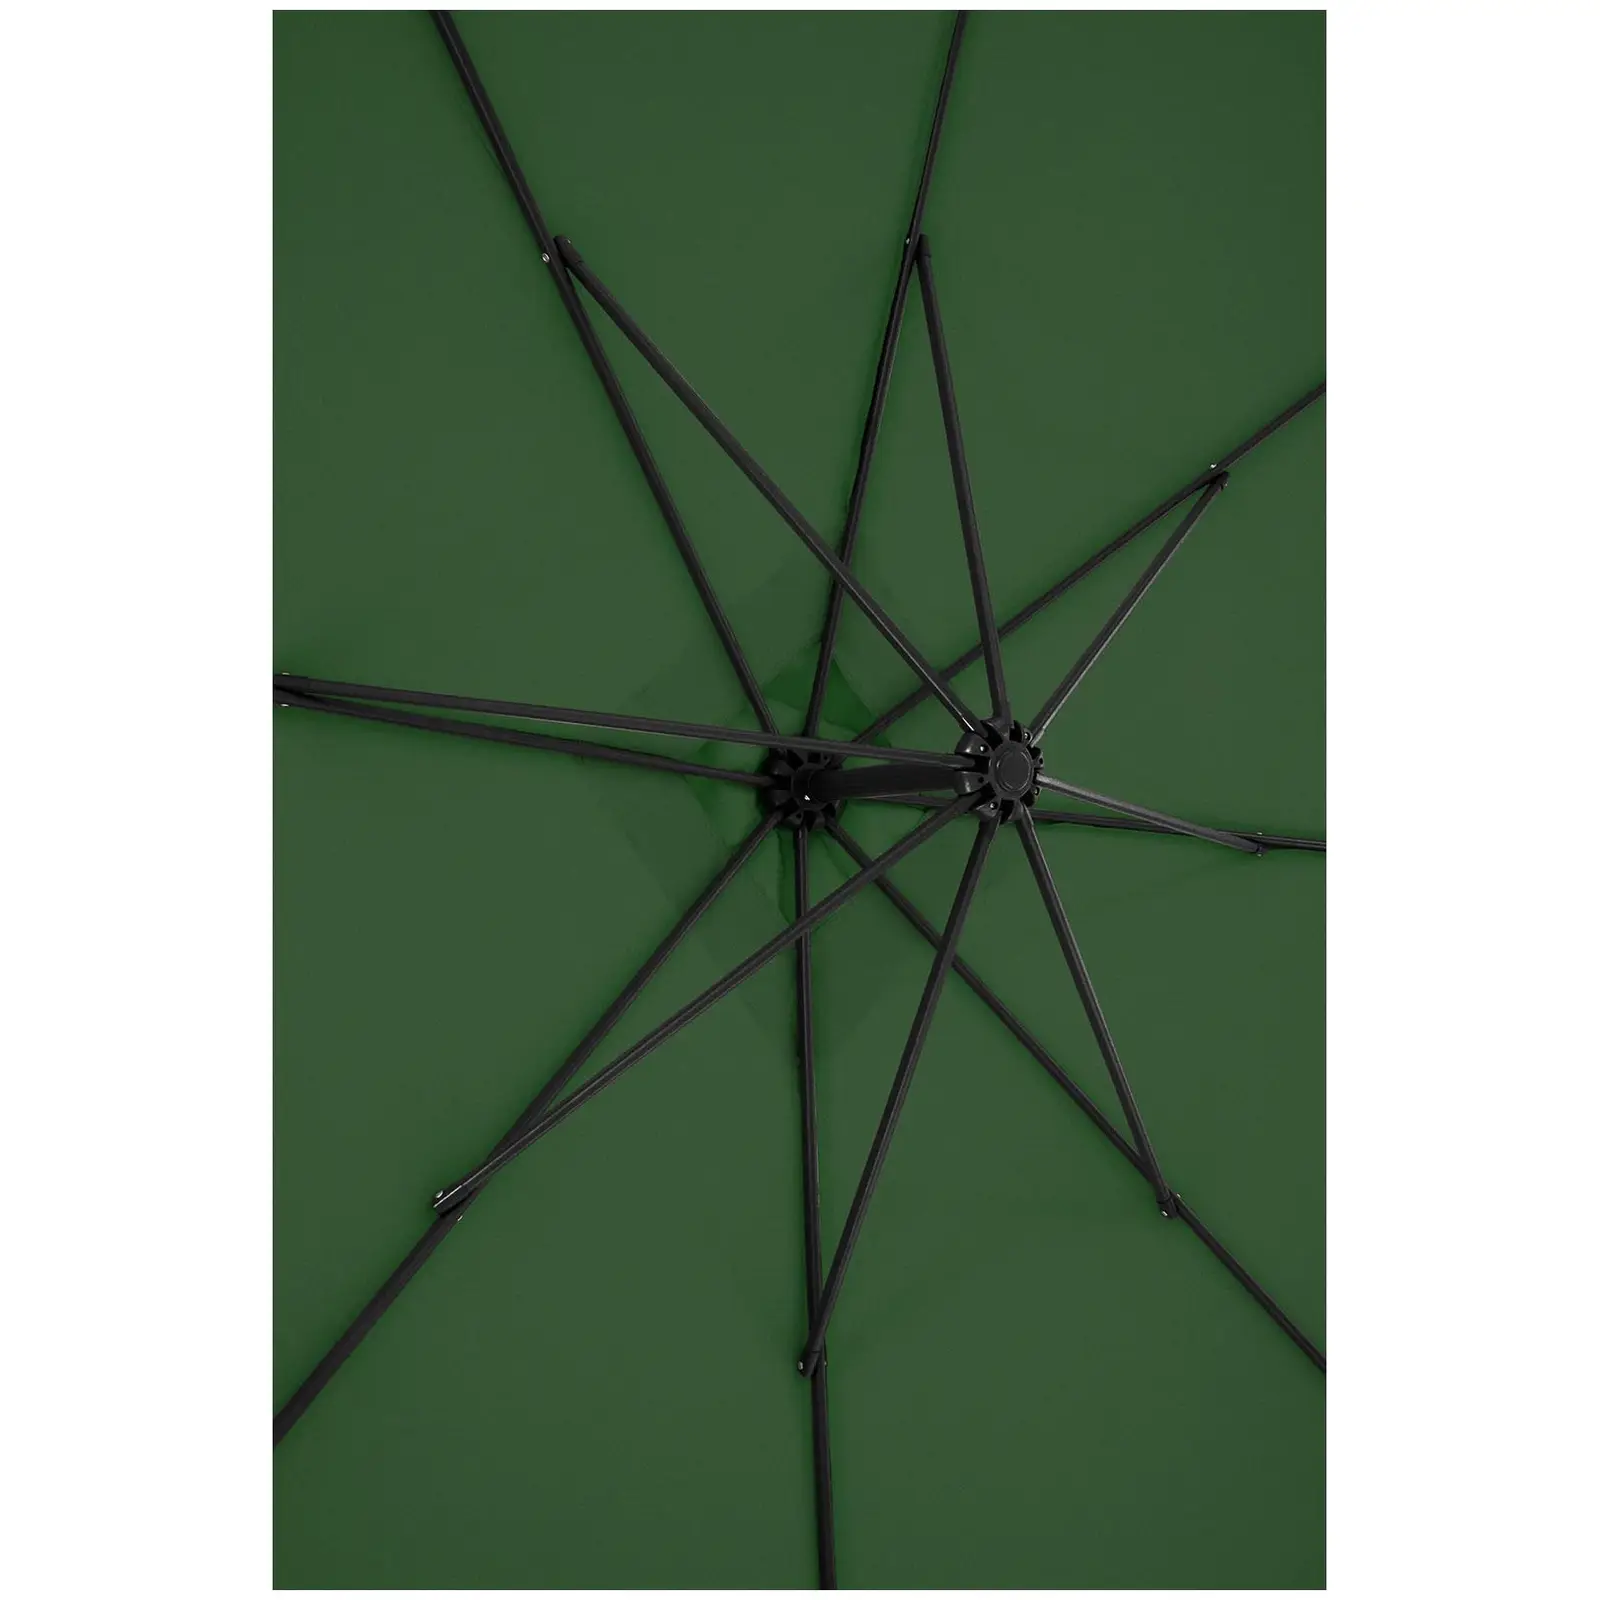 Produtos recondicionados Guarda-sol suspenso para jardim - 250 x 250 cm - cor verde